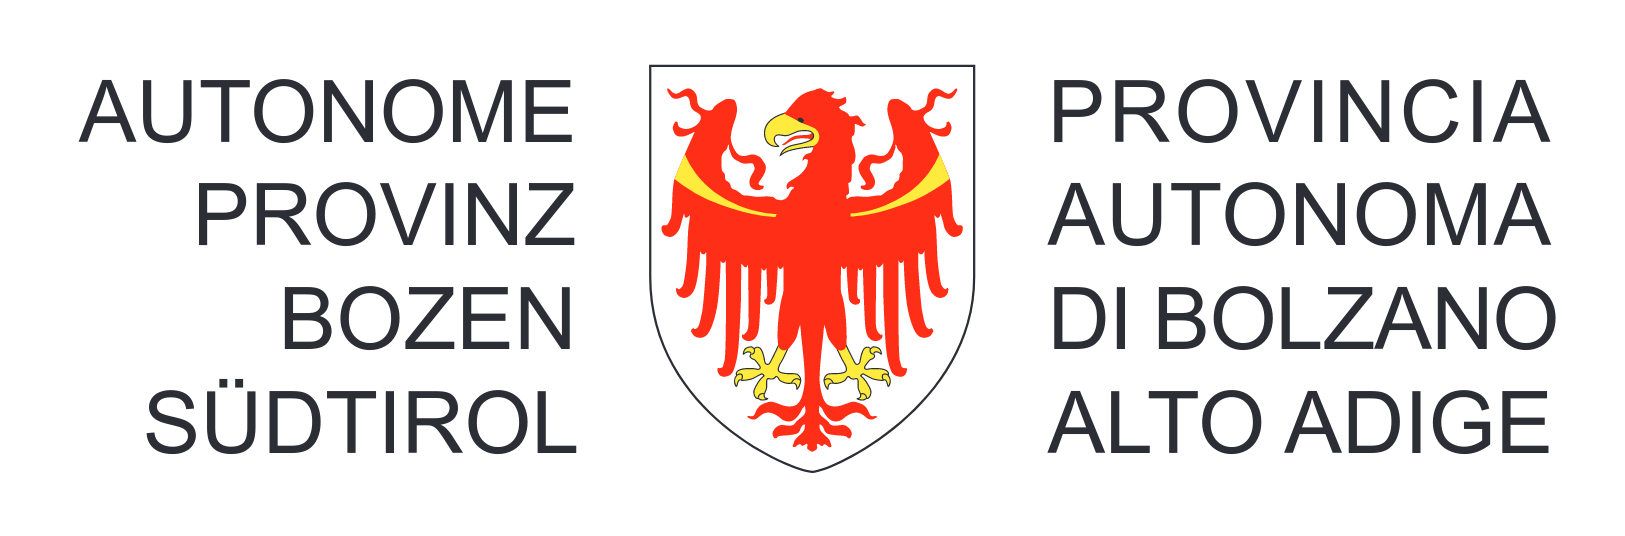 Autonome-Provinz-Bozen-Suedtirol